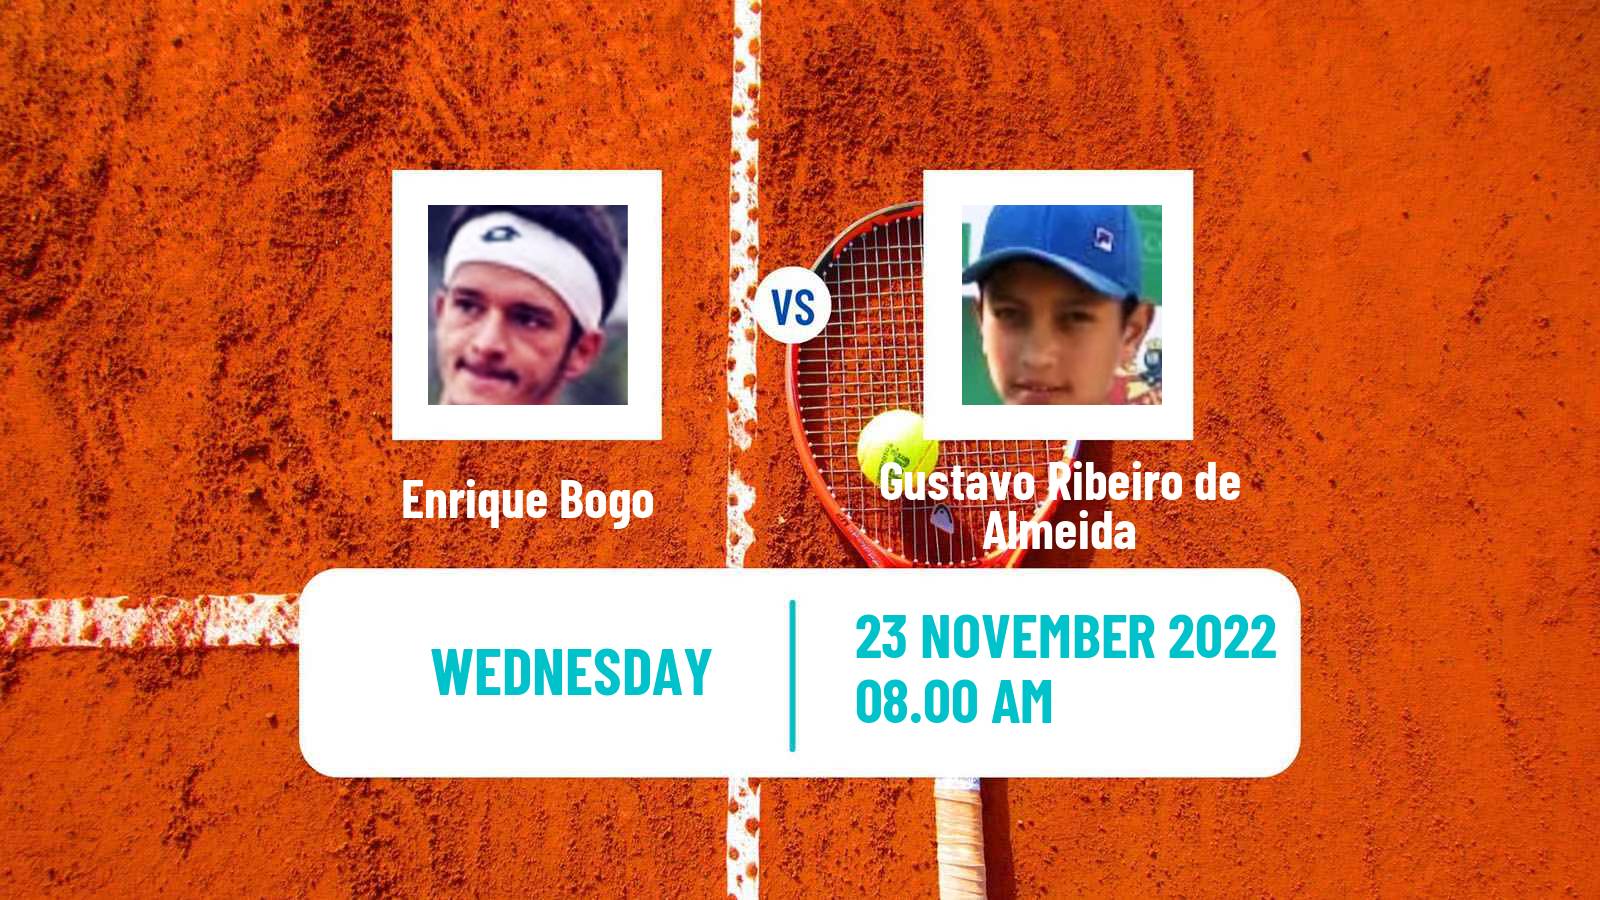 Tennis ITF Tournaments Enrique Bogo - Gustavo Ribeiro de Almeida